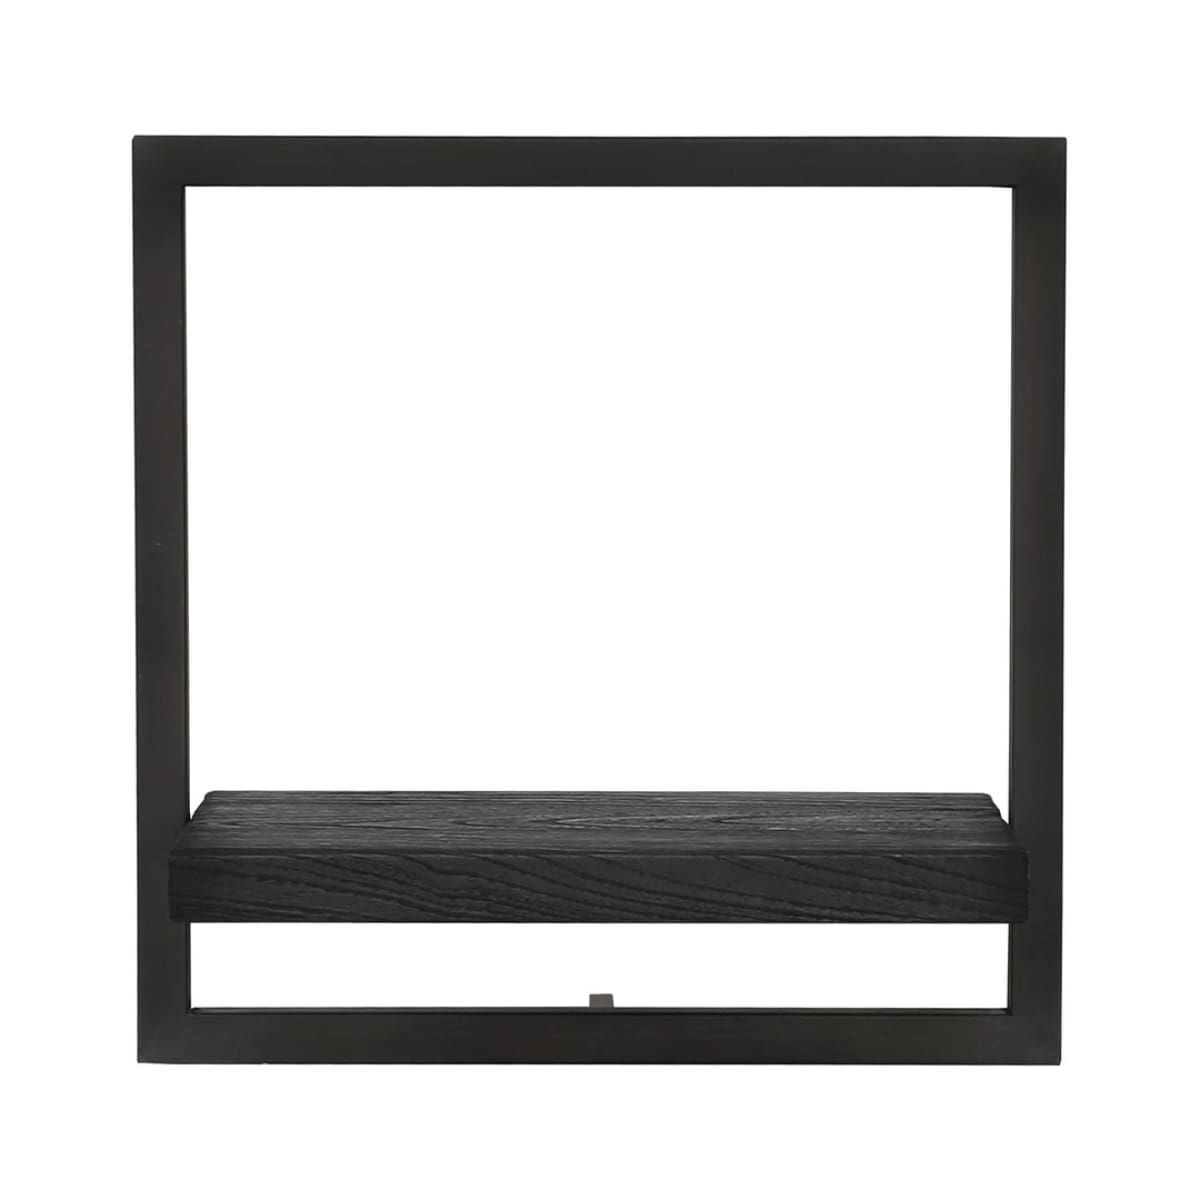 D-Bodhi Metal Frame Wall Box - Black Type B (1/Box) - lh-import-shelving-storage